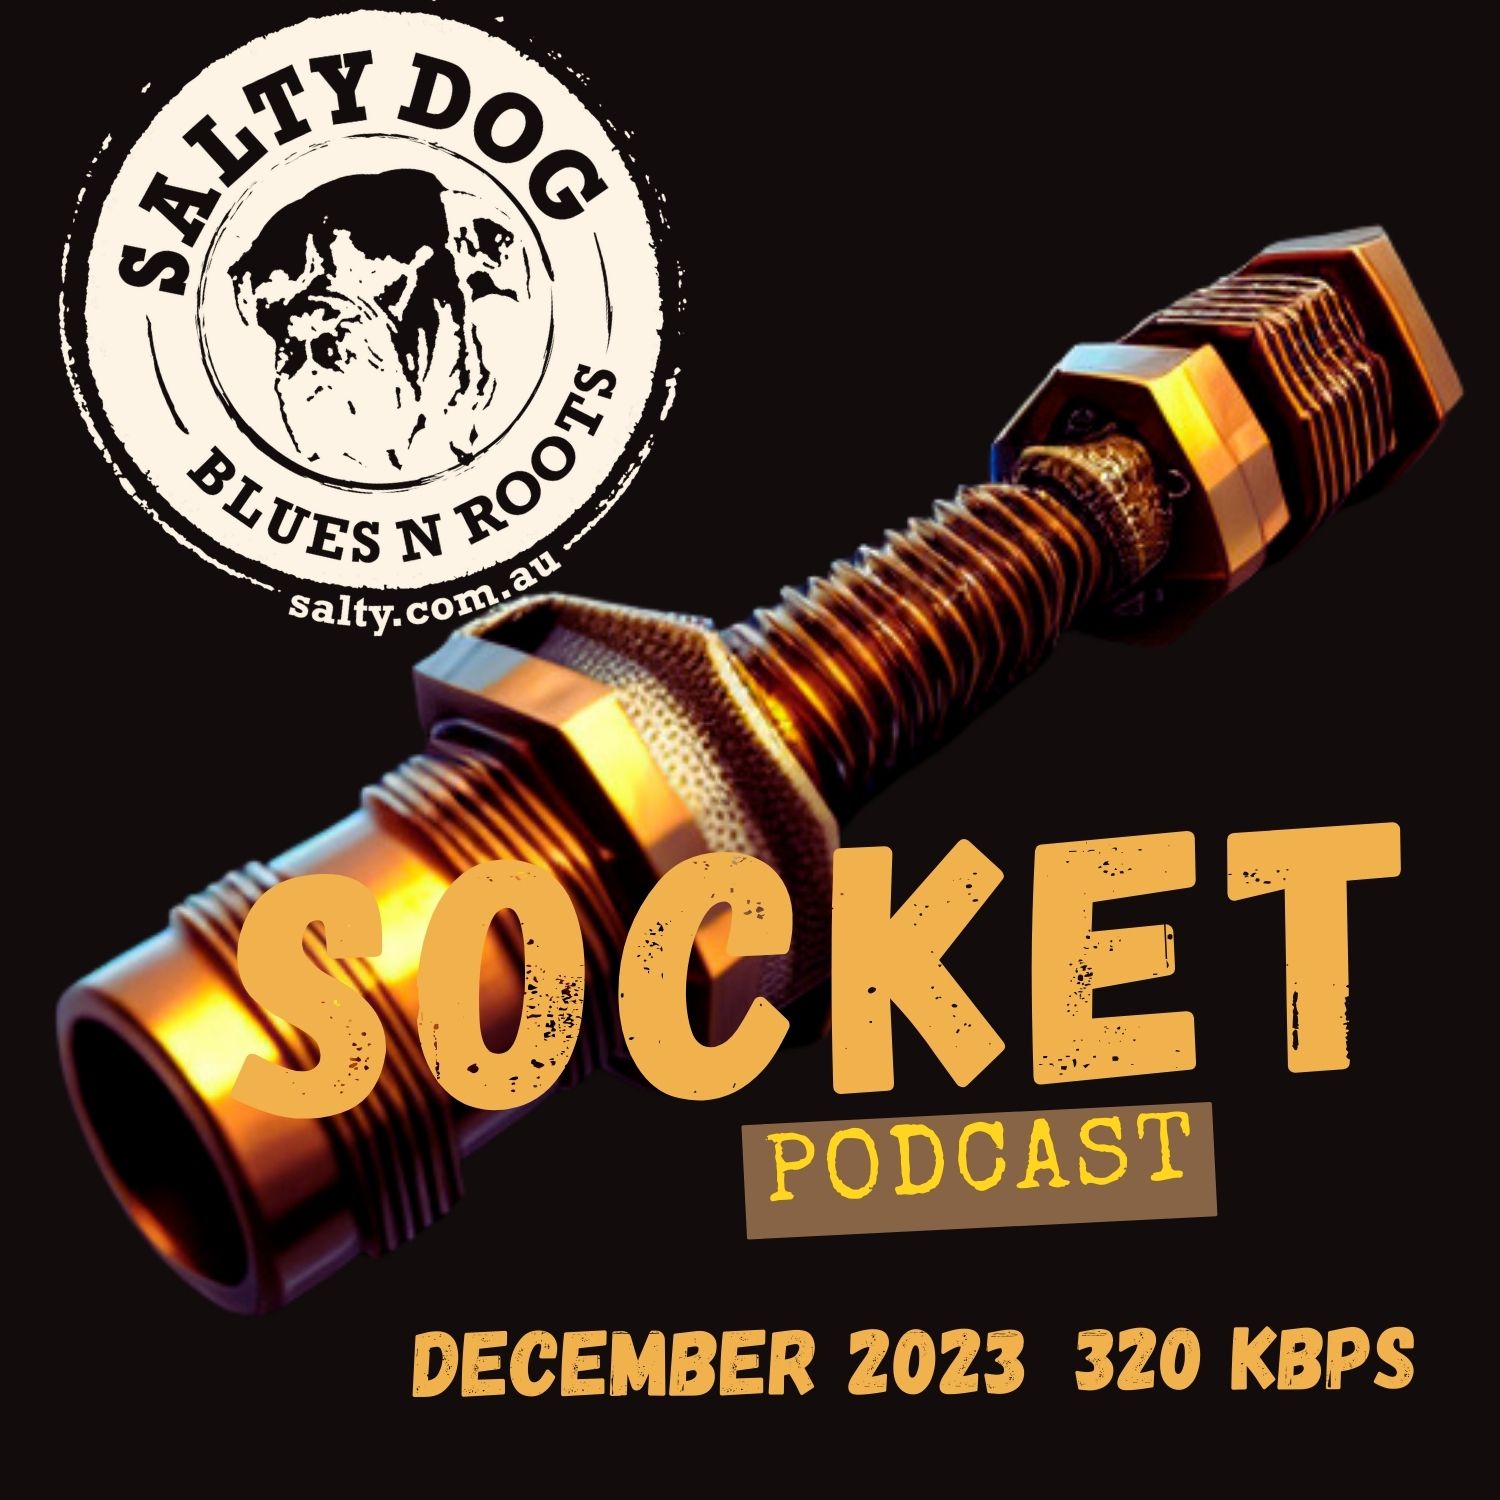 SOCKET Blues N Roots - Salty Dog (December 2023)